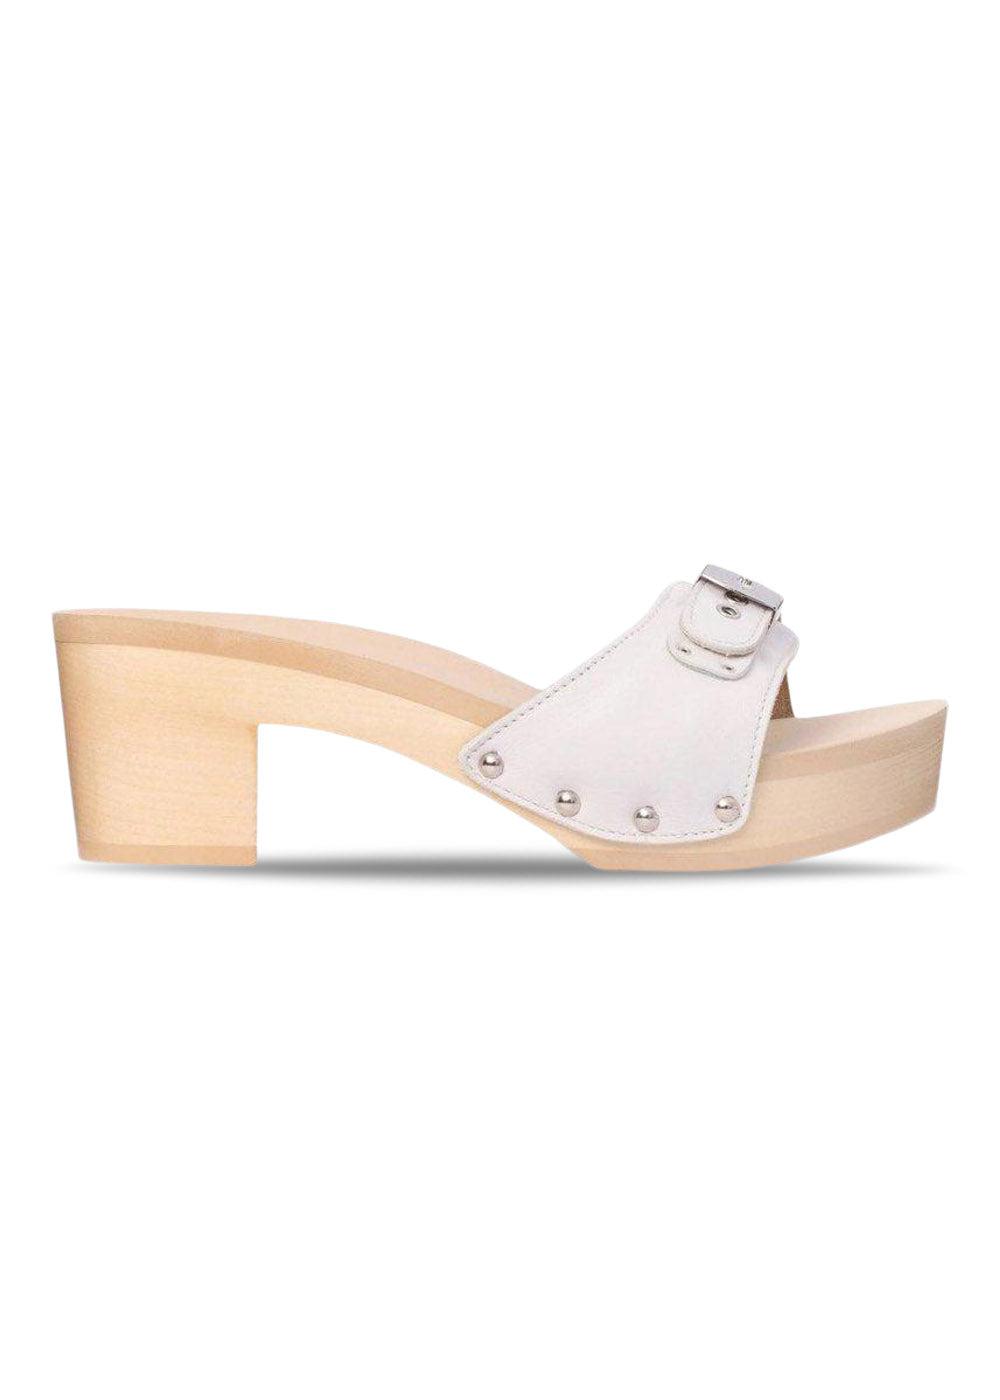 Scholls SL PESCURA IBIZA WHITE - White. Køb sandaler her.